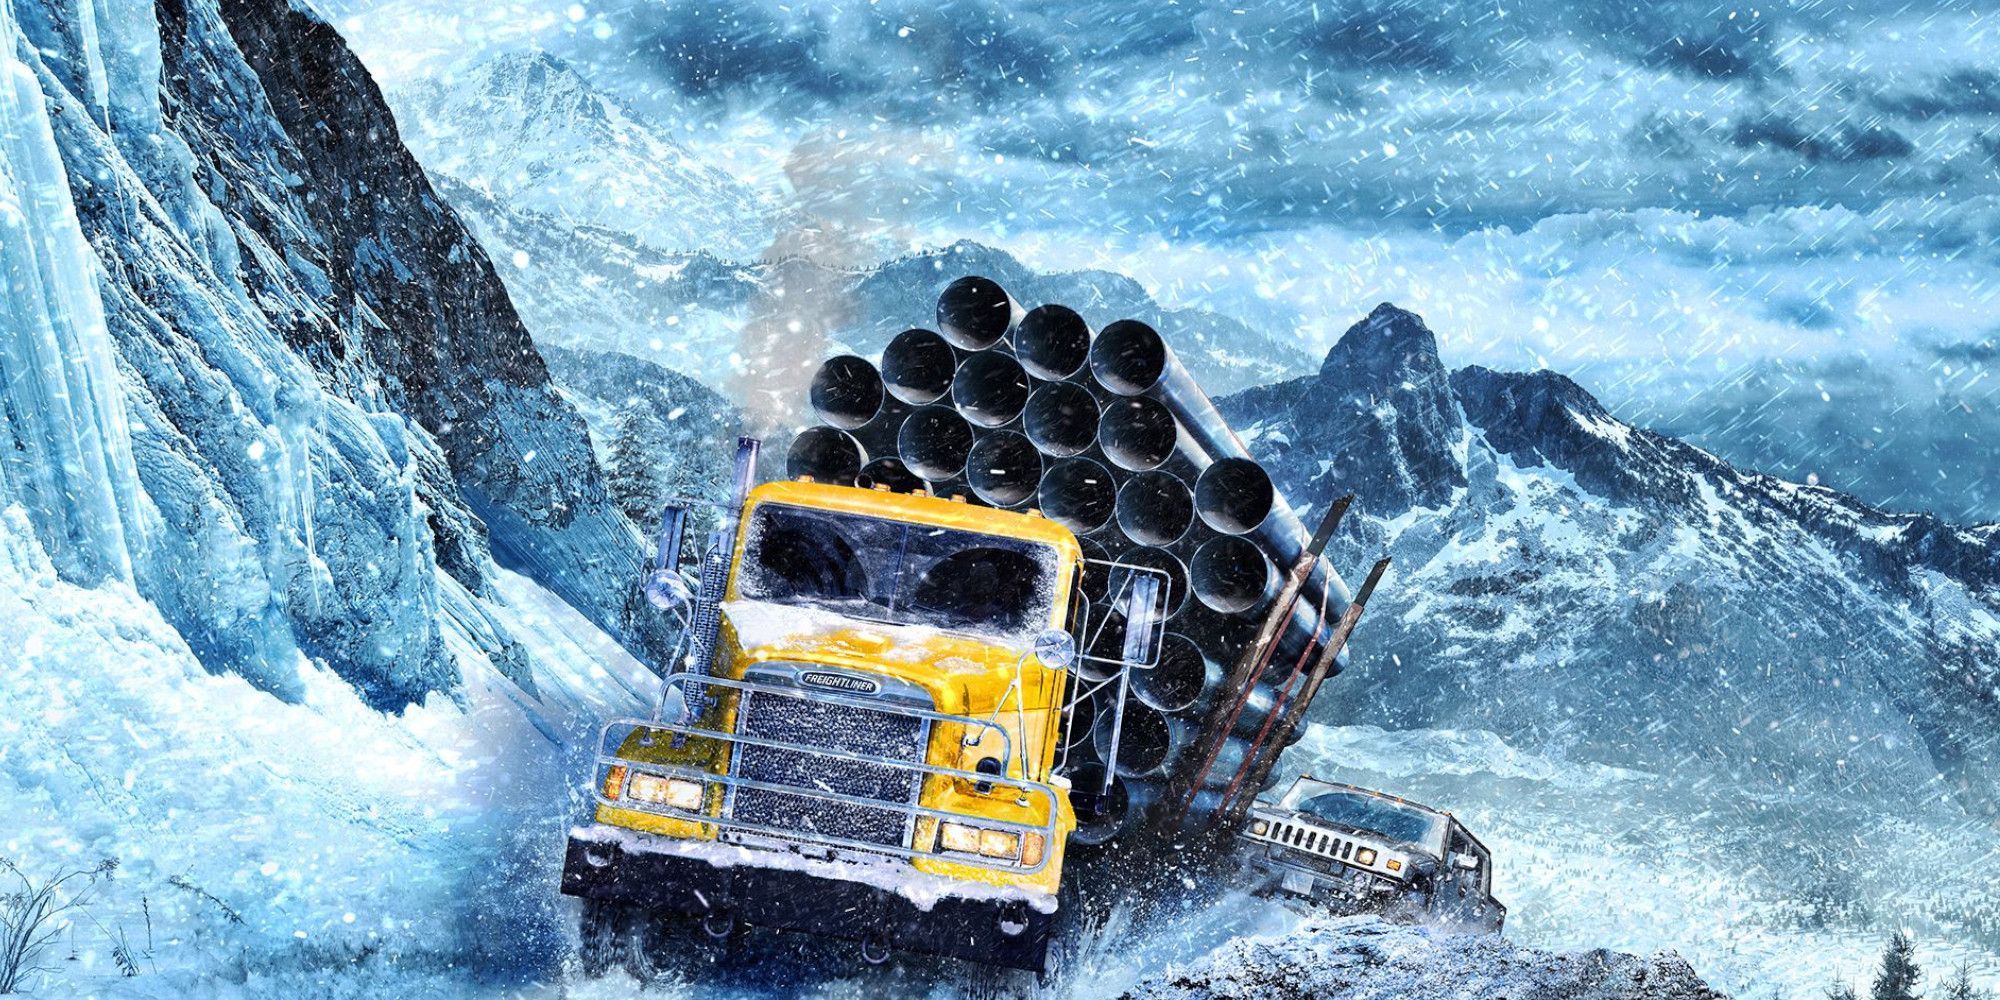 A yellow truck with a hazardous load climbs a mountain